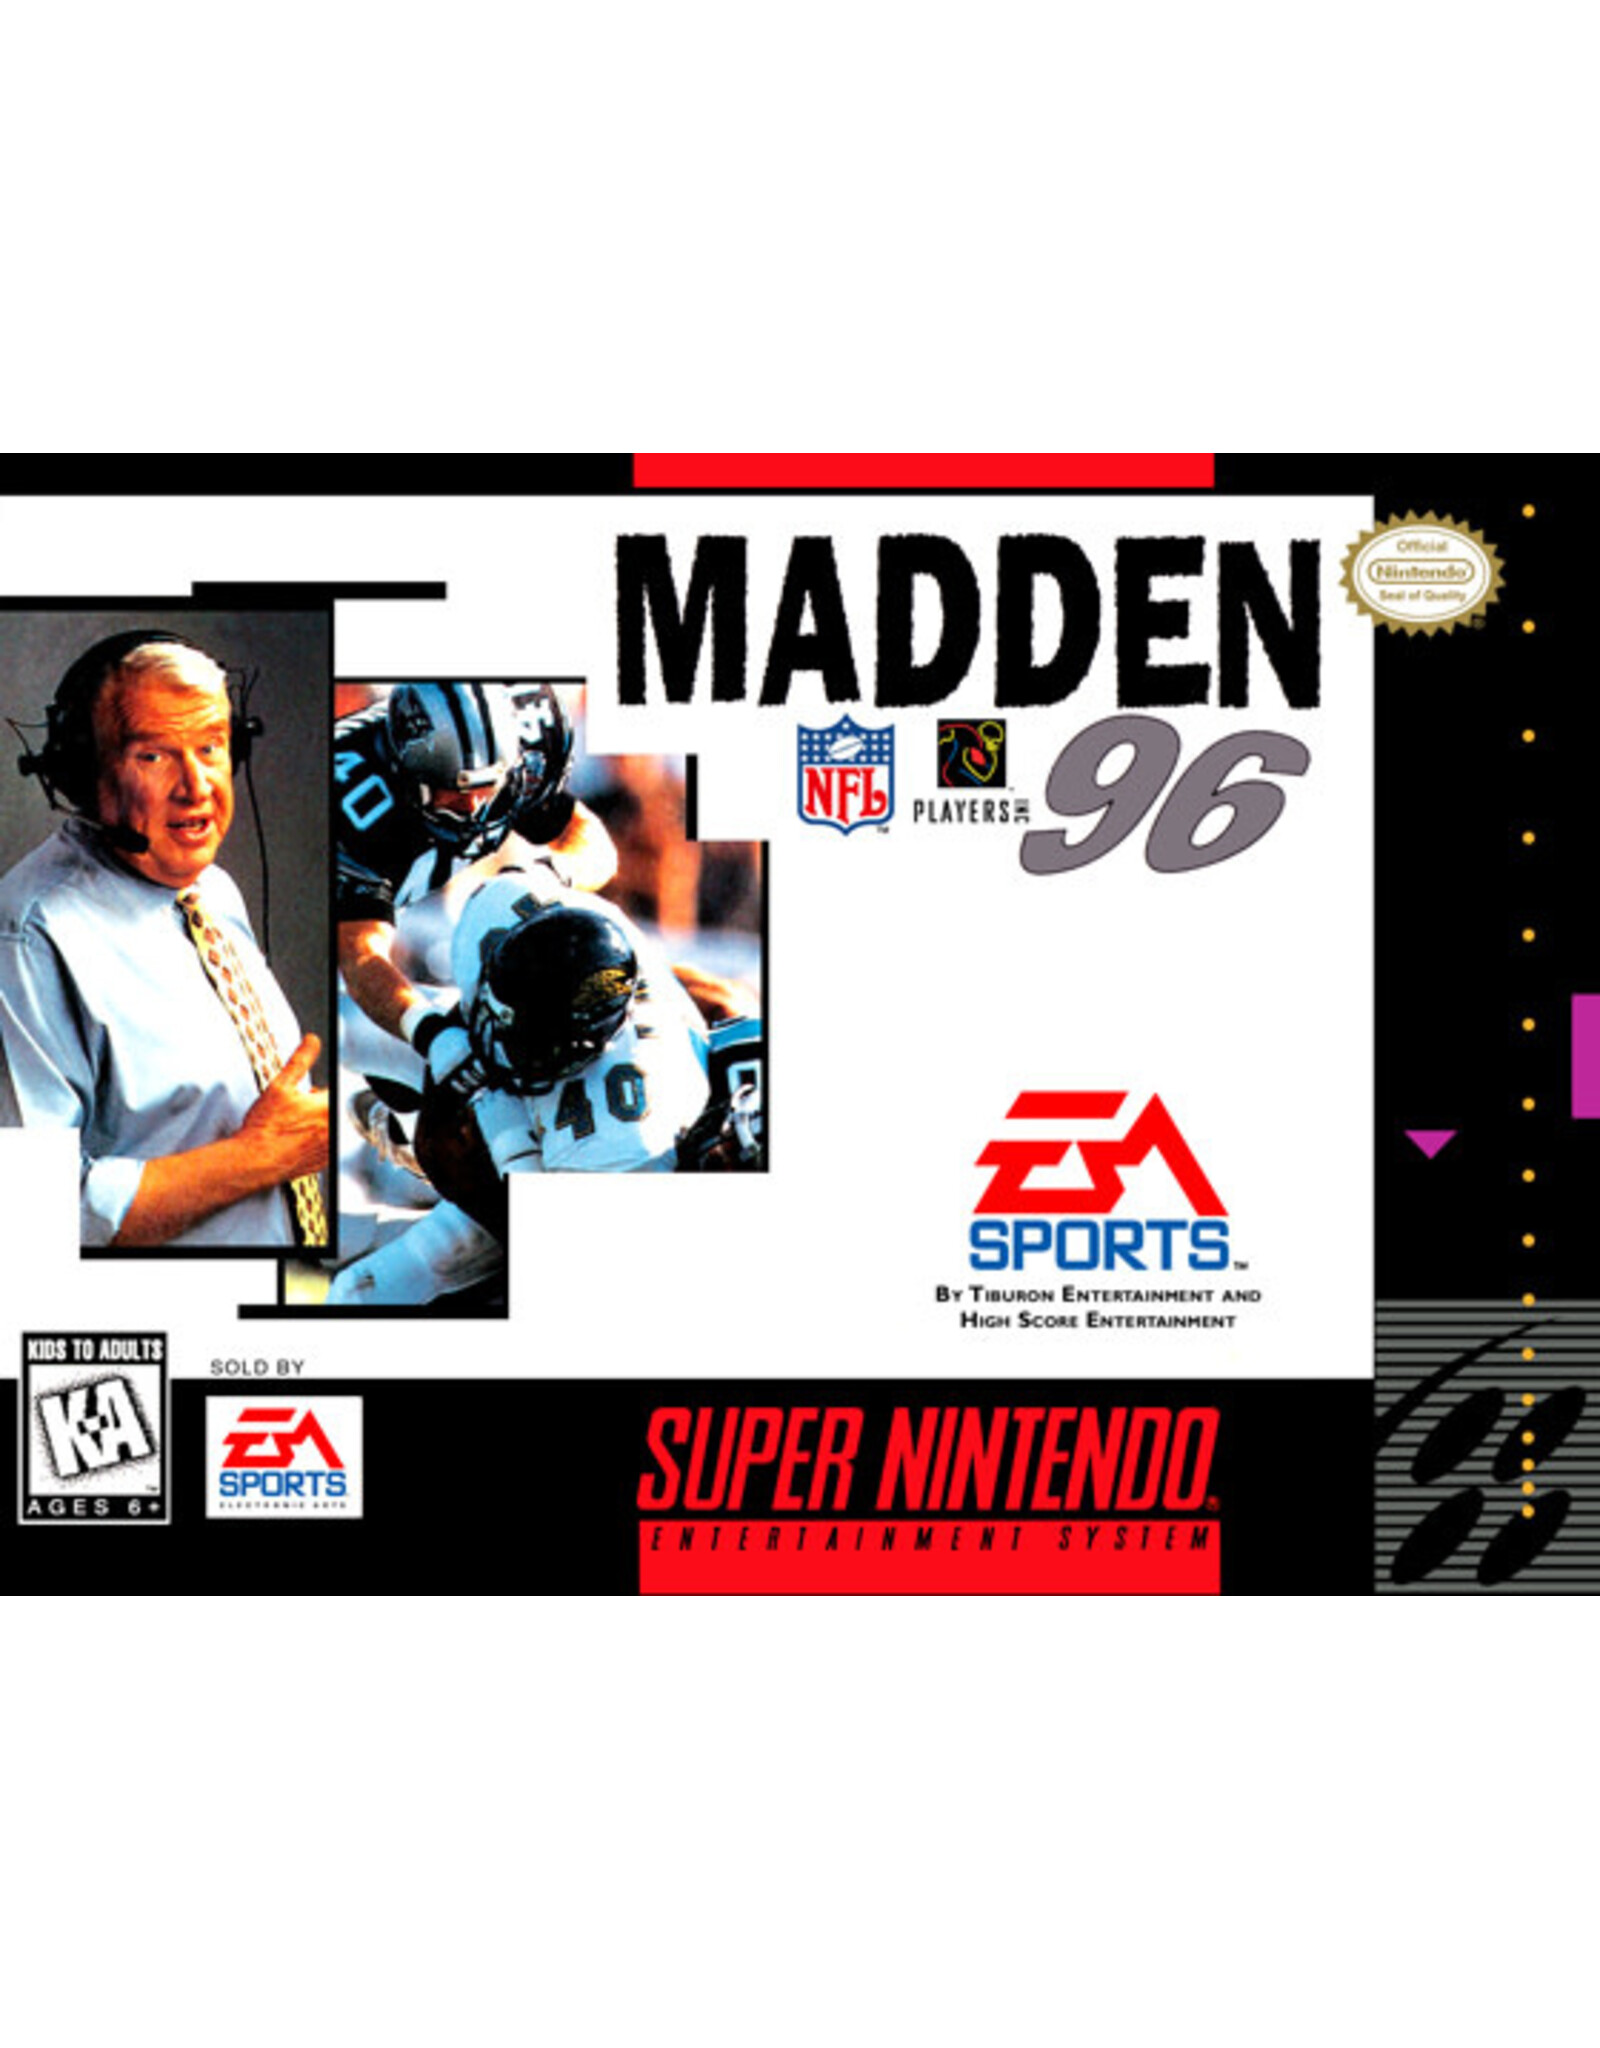 Super Nintendo Madden NFL 96 (CiB)